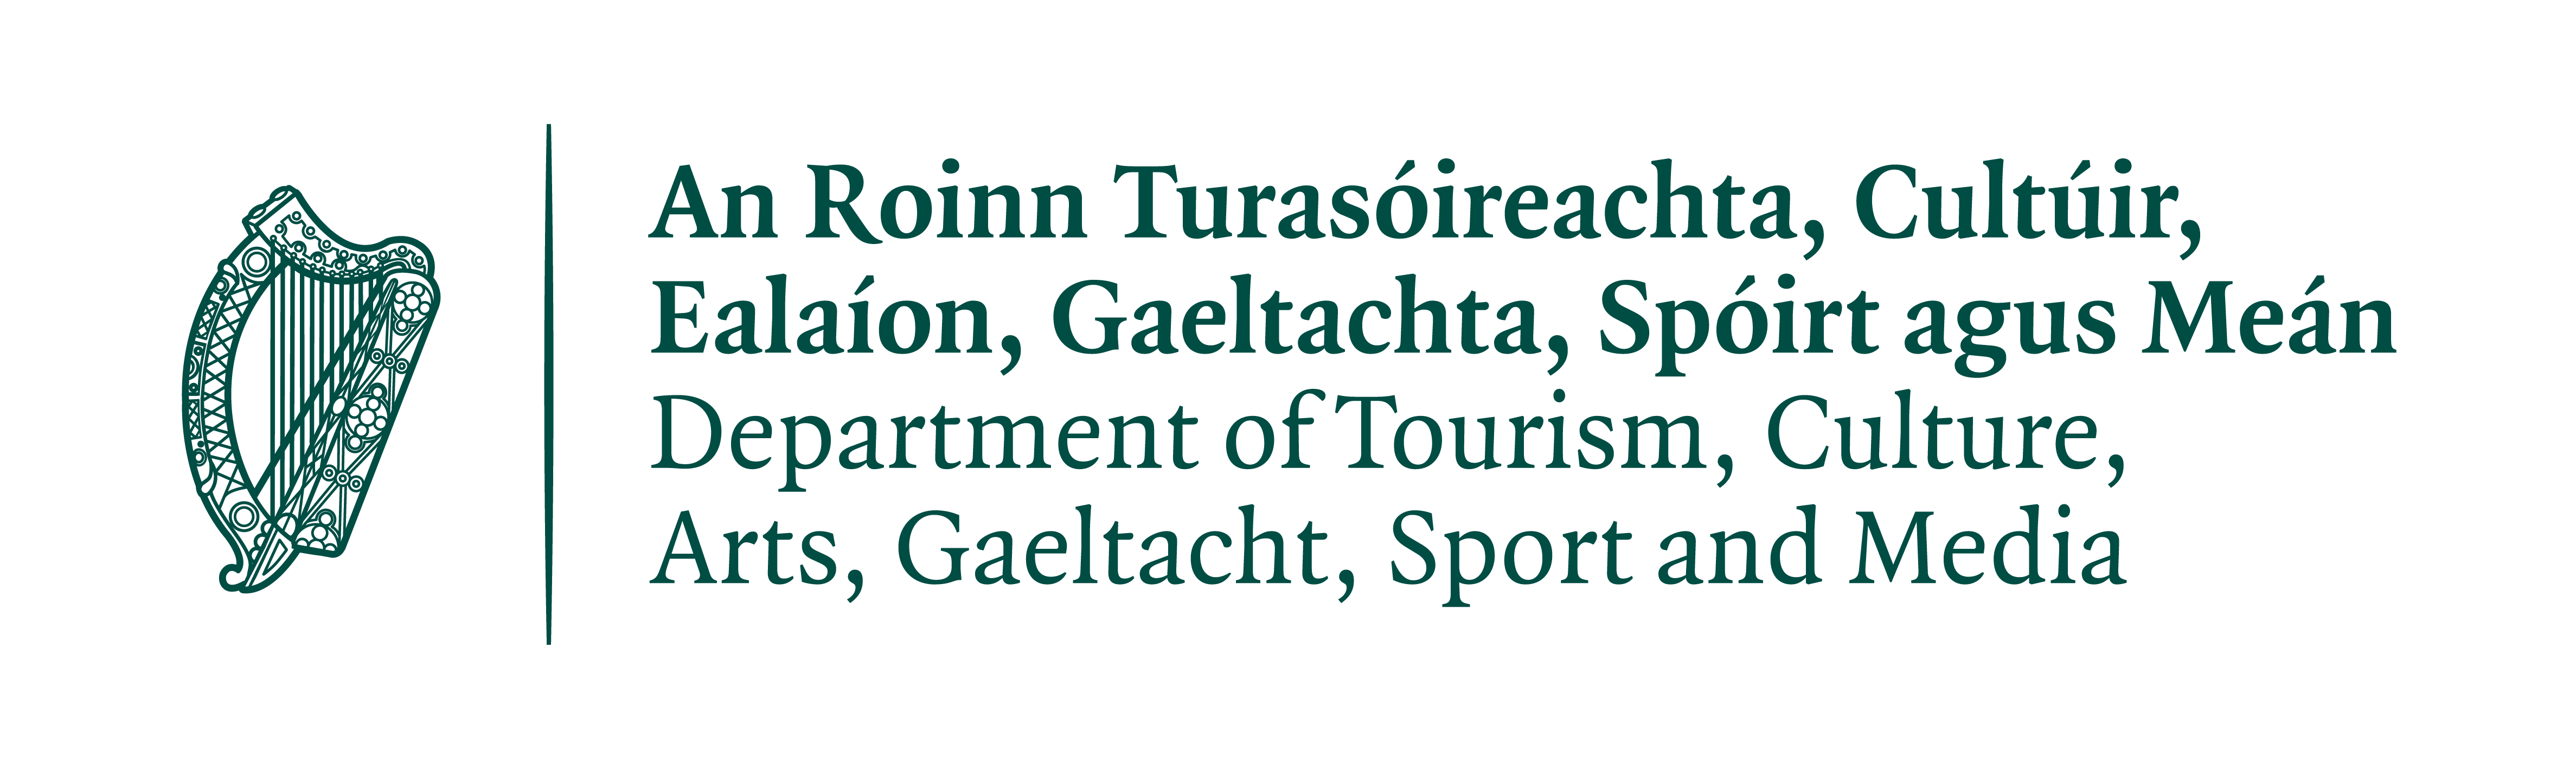 Dept.-Tourism,-Culture,-Arts,-Gaeltacht,-Sport Logo